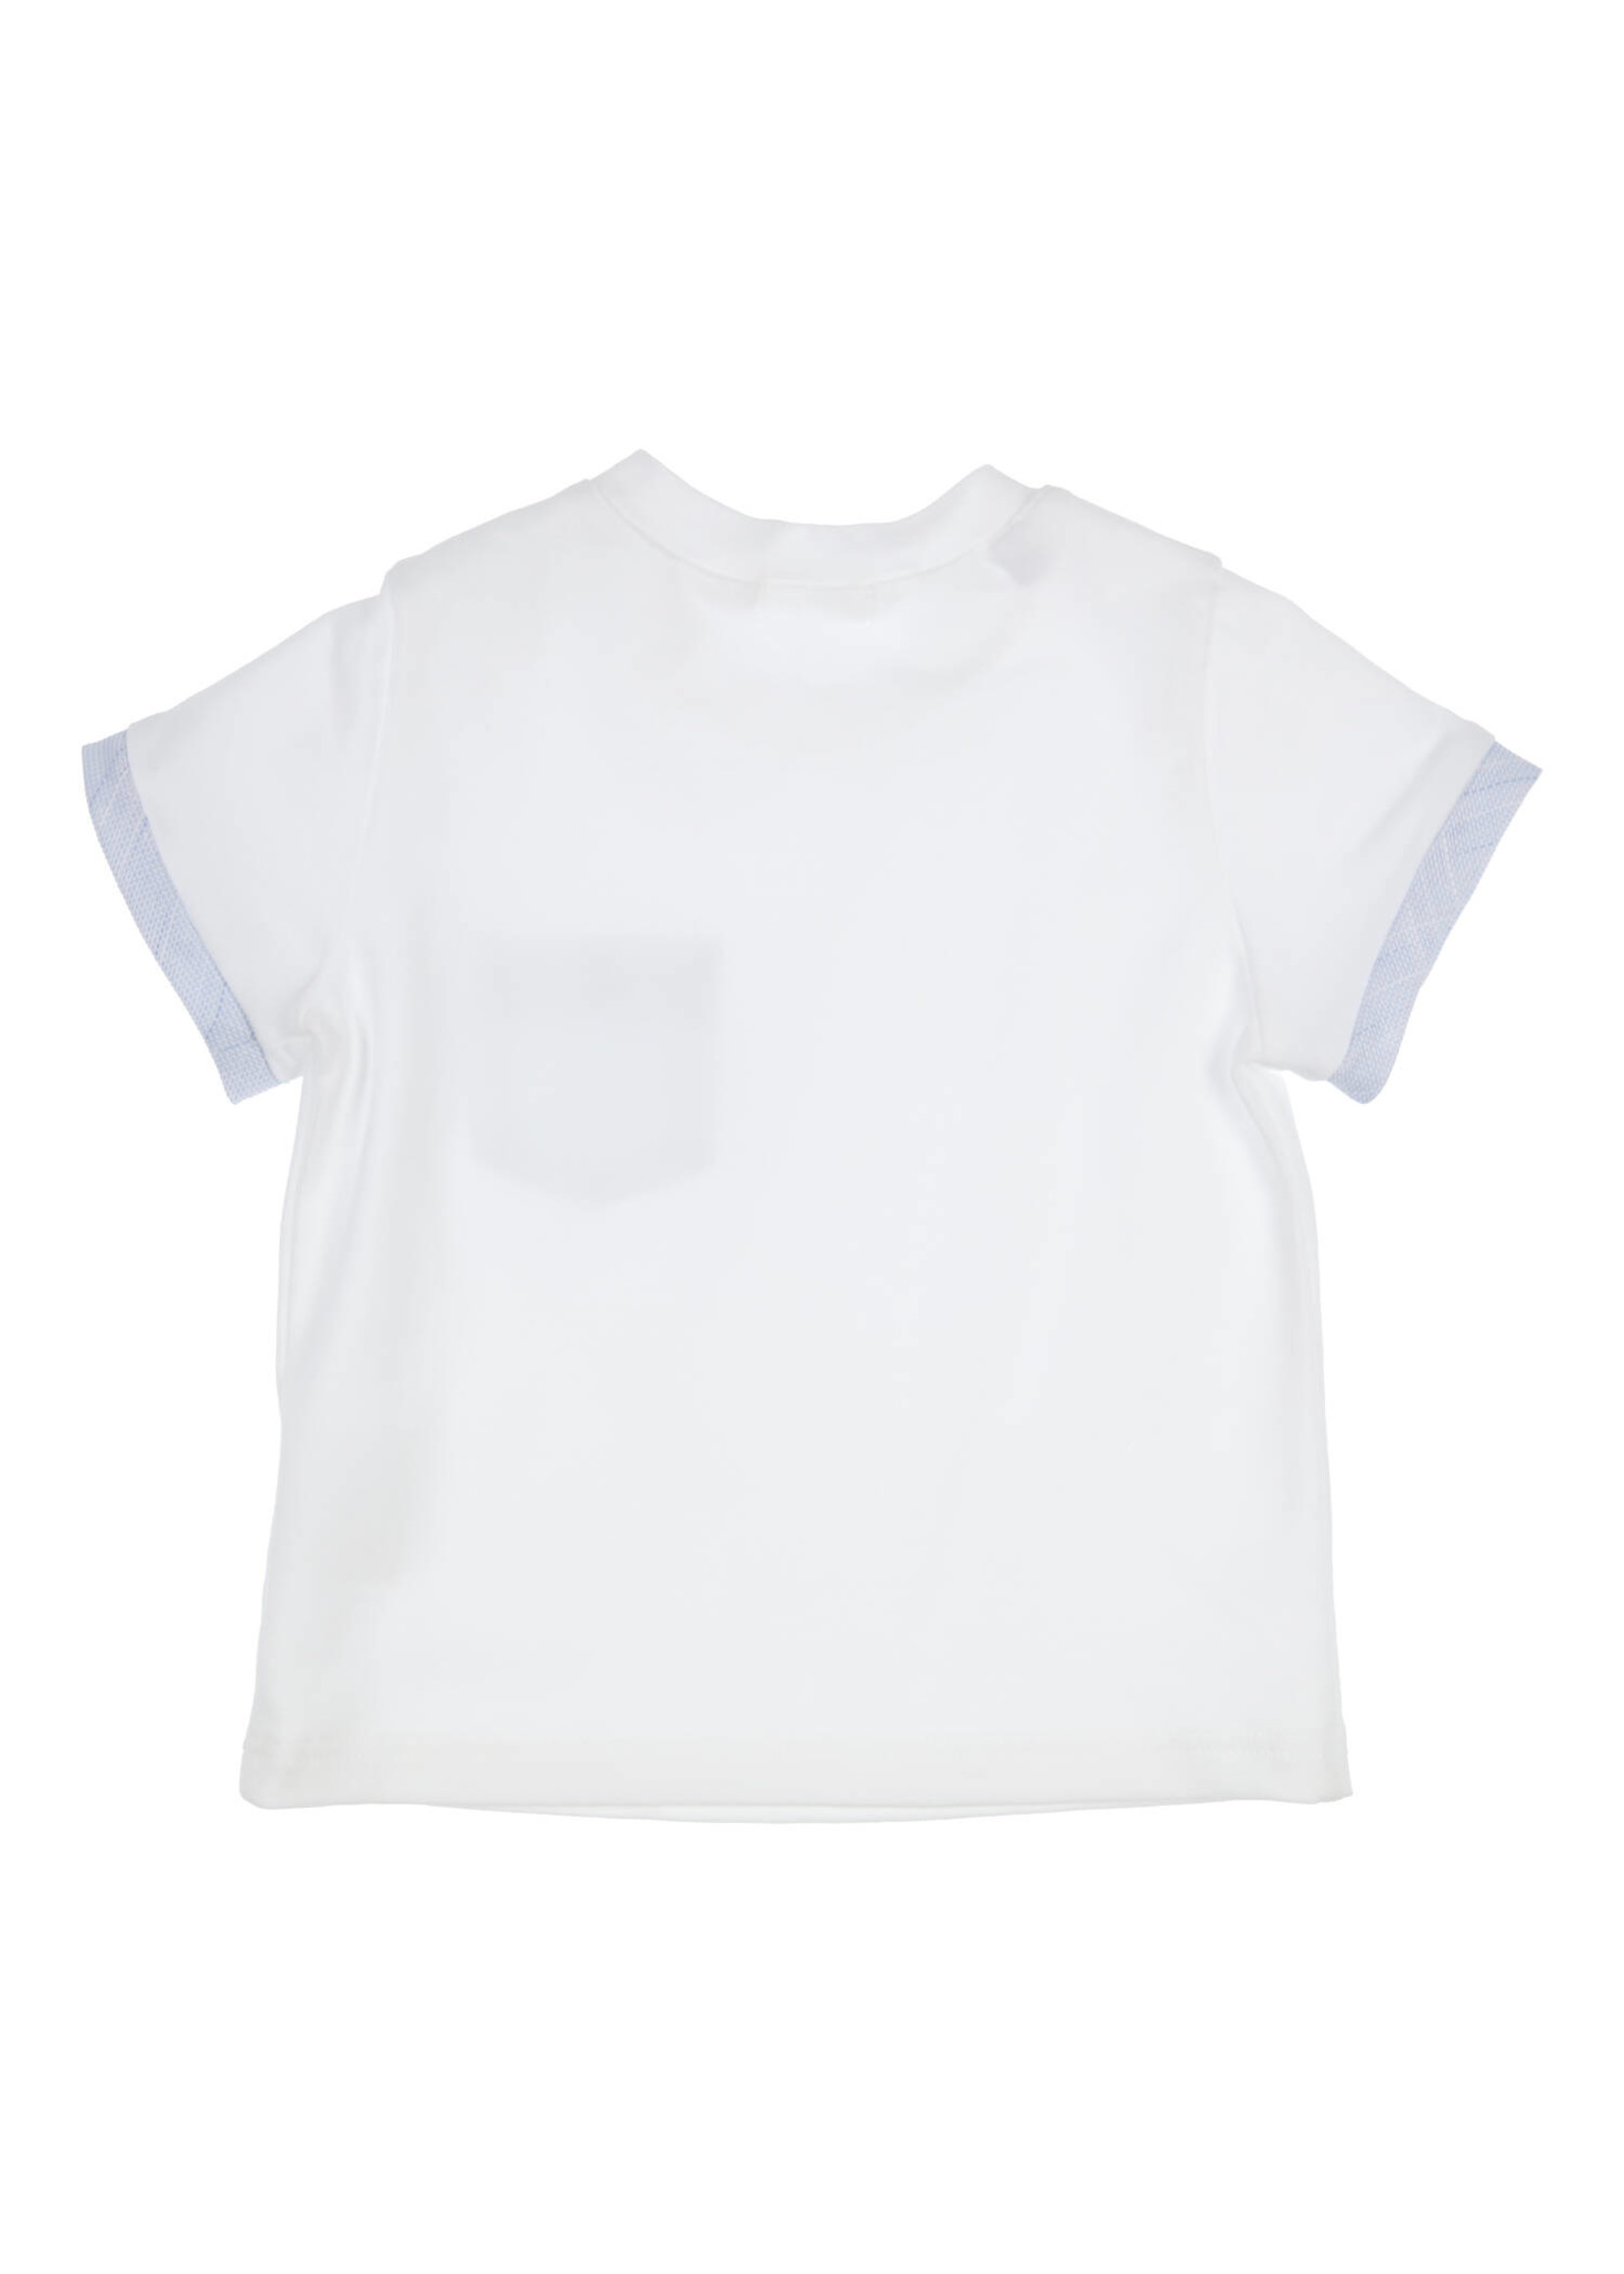 Gymp T-shirt Aerobic White - Light Blue 353-3221-20